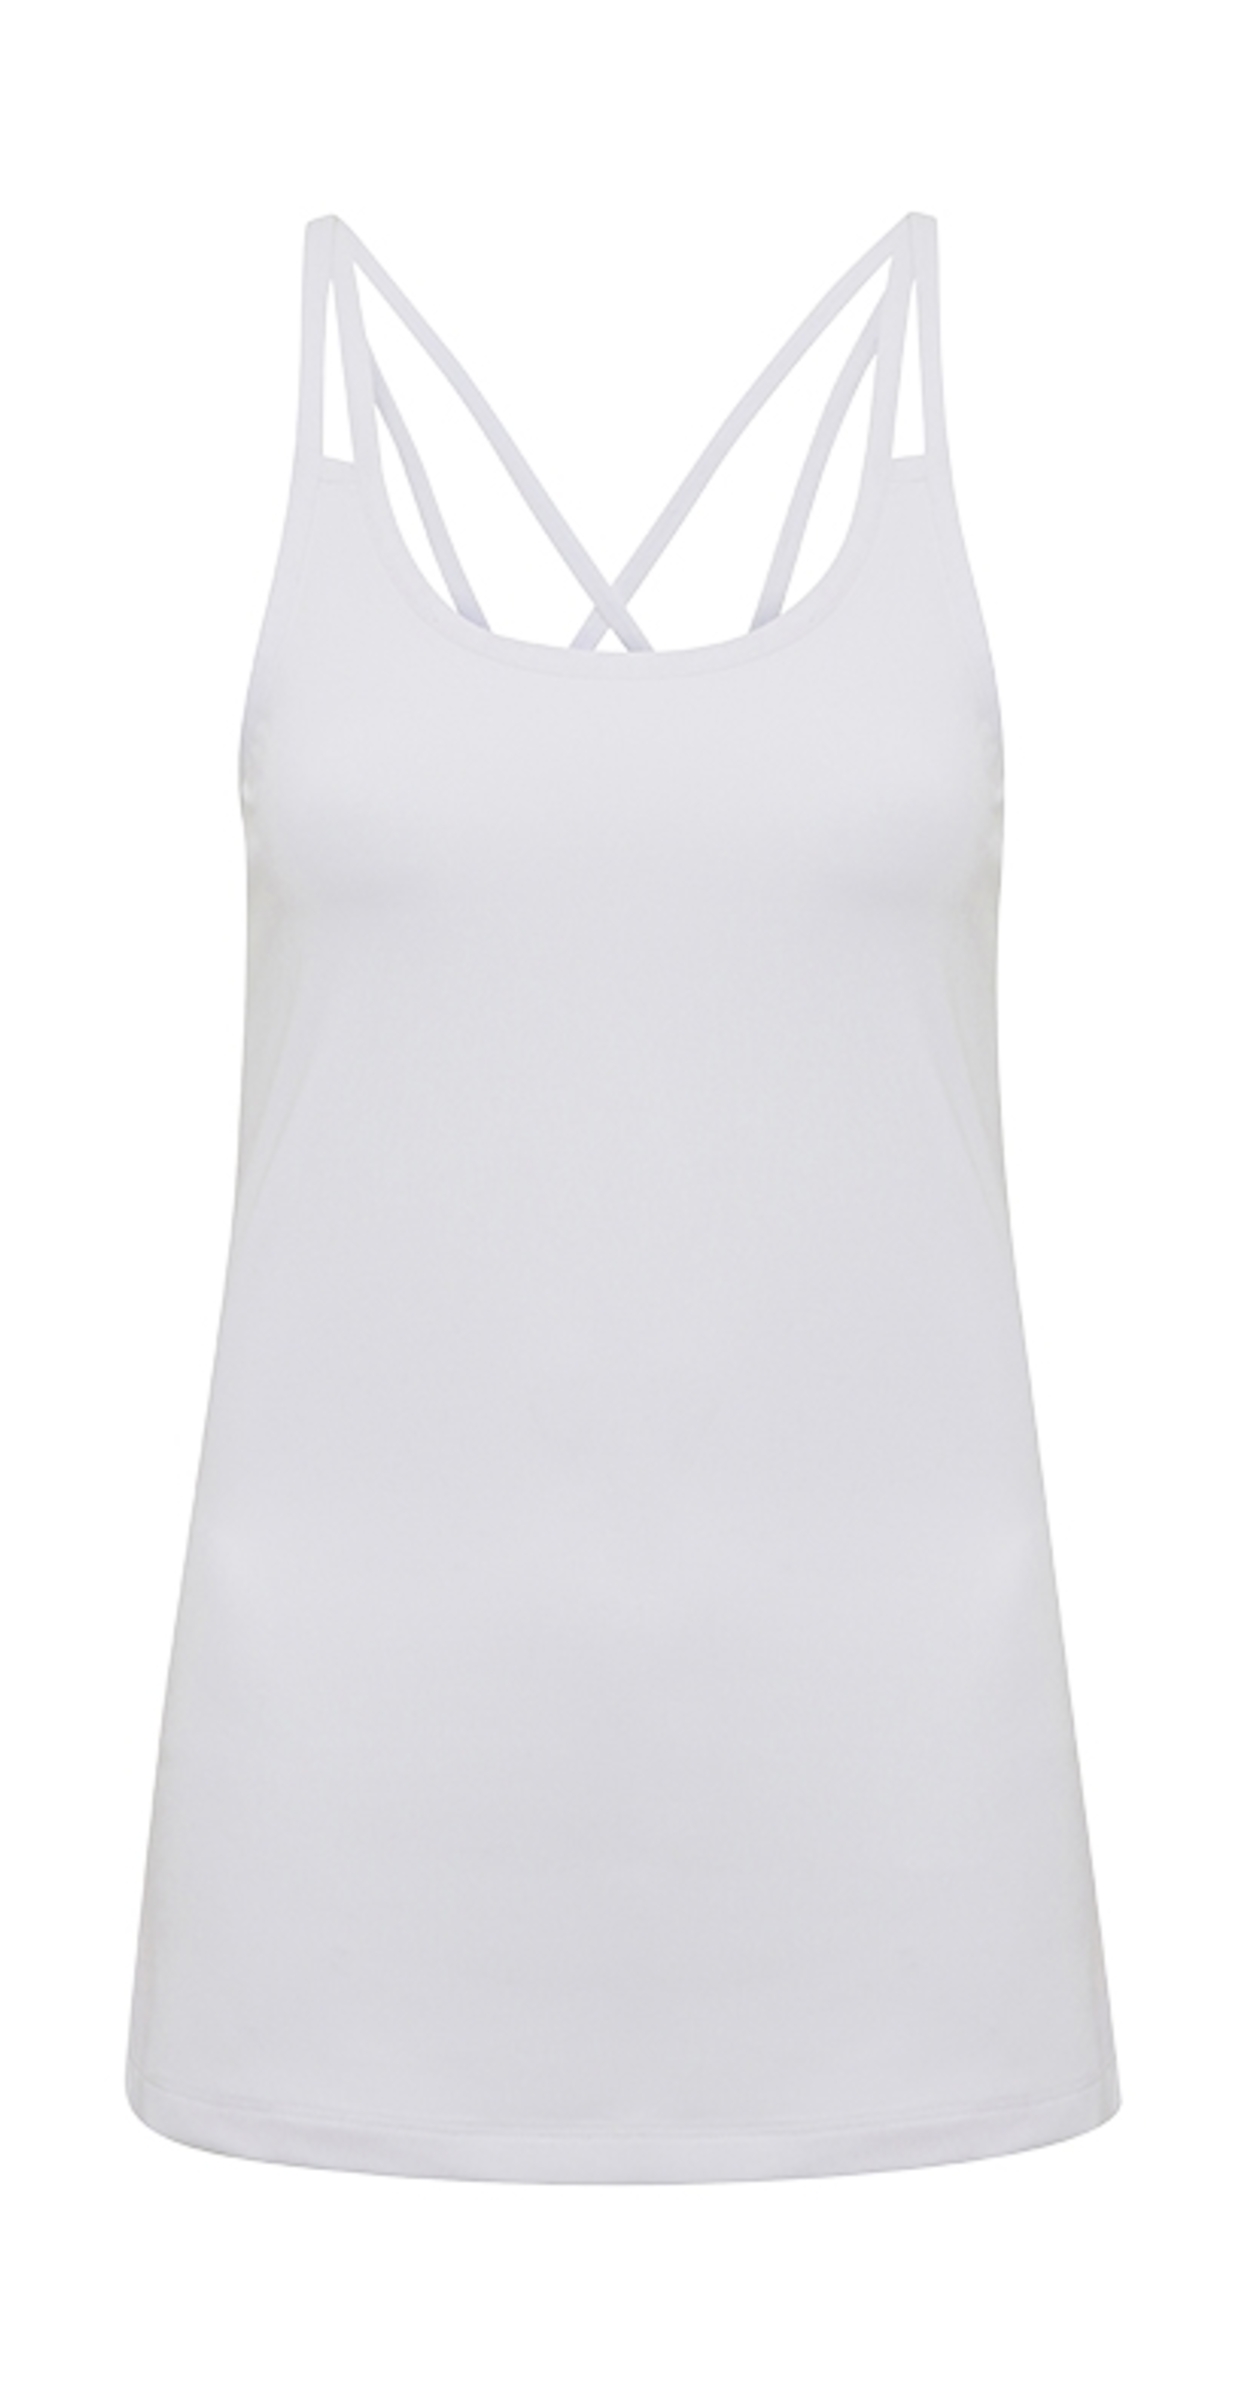 Tri Dri Women's Tridri® "Lazer Cut" Spaghetti Strap Vest - White - Xs